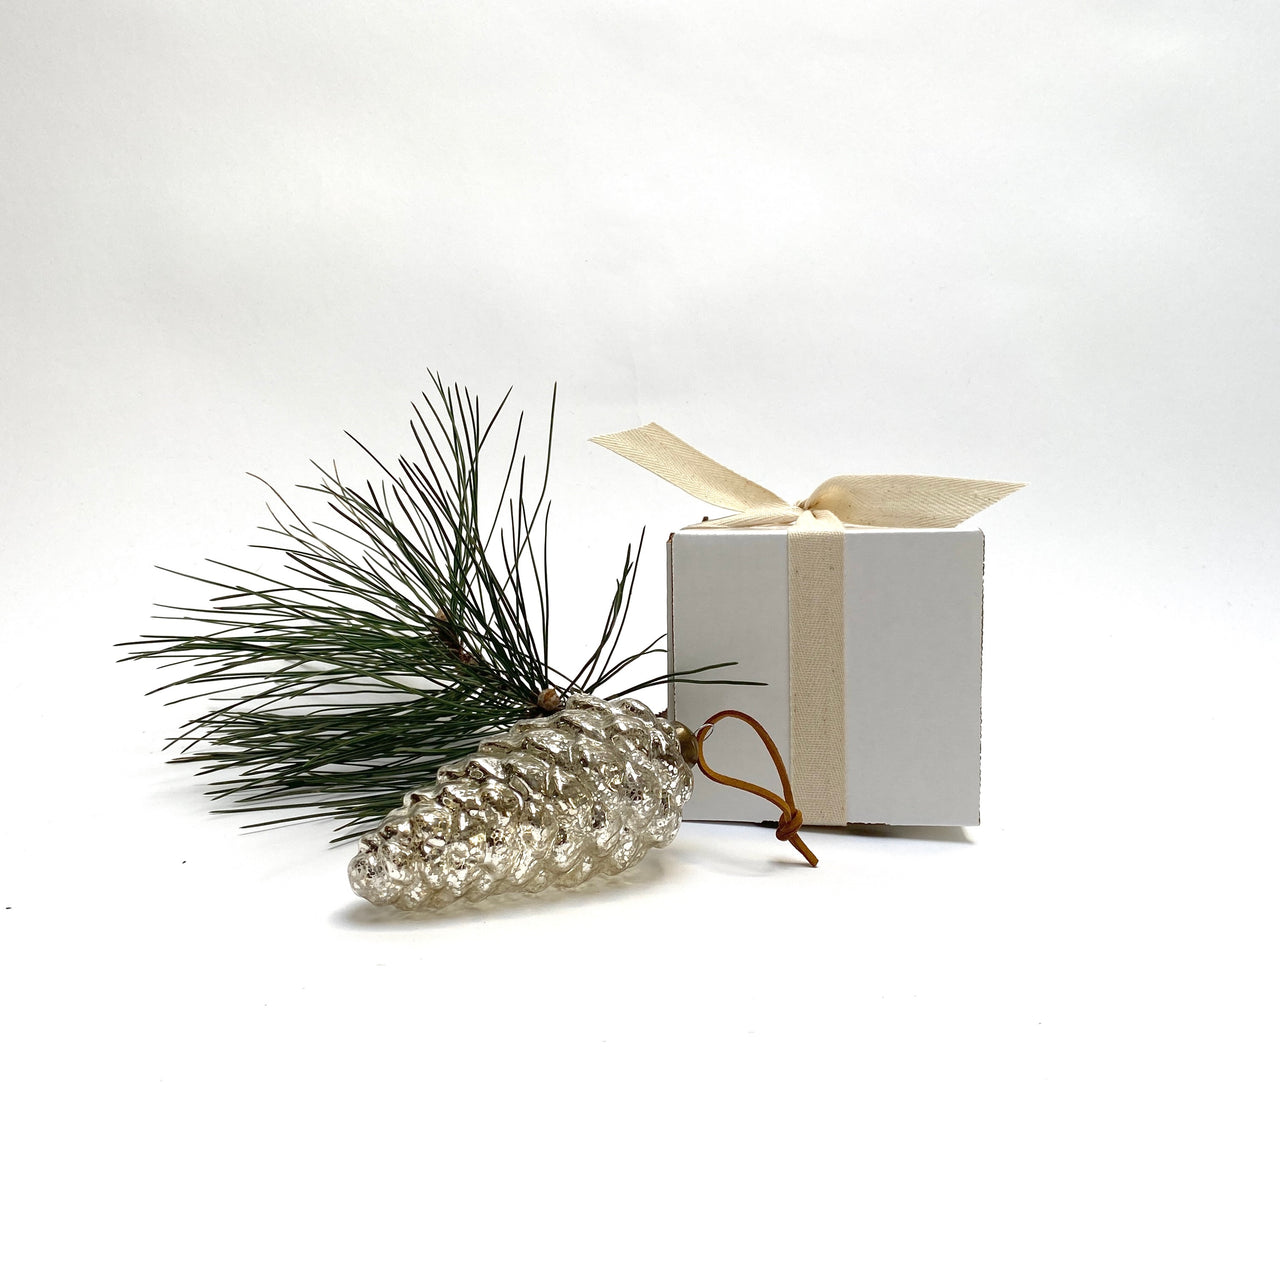 pine cone in a box